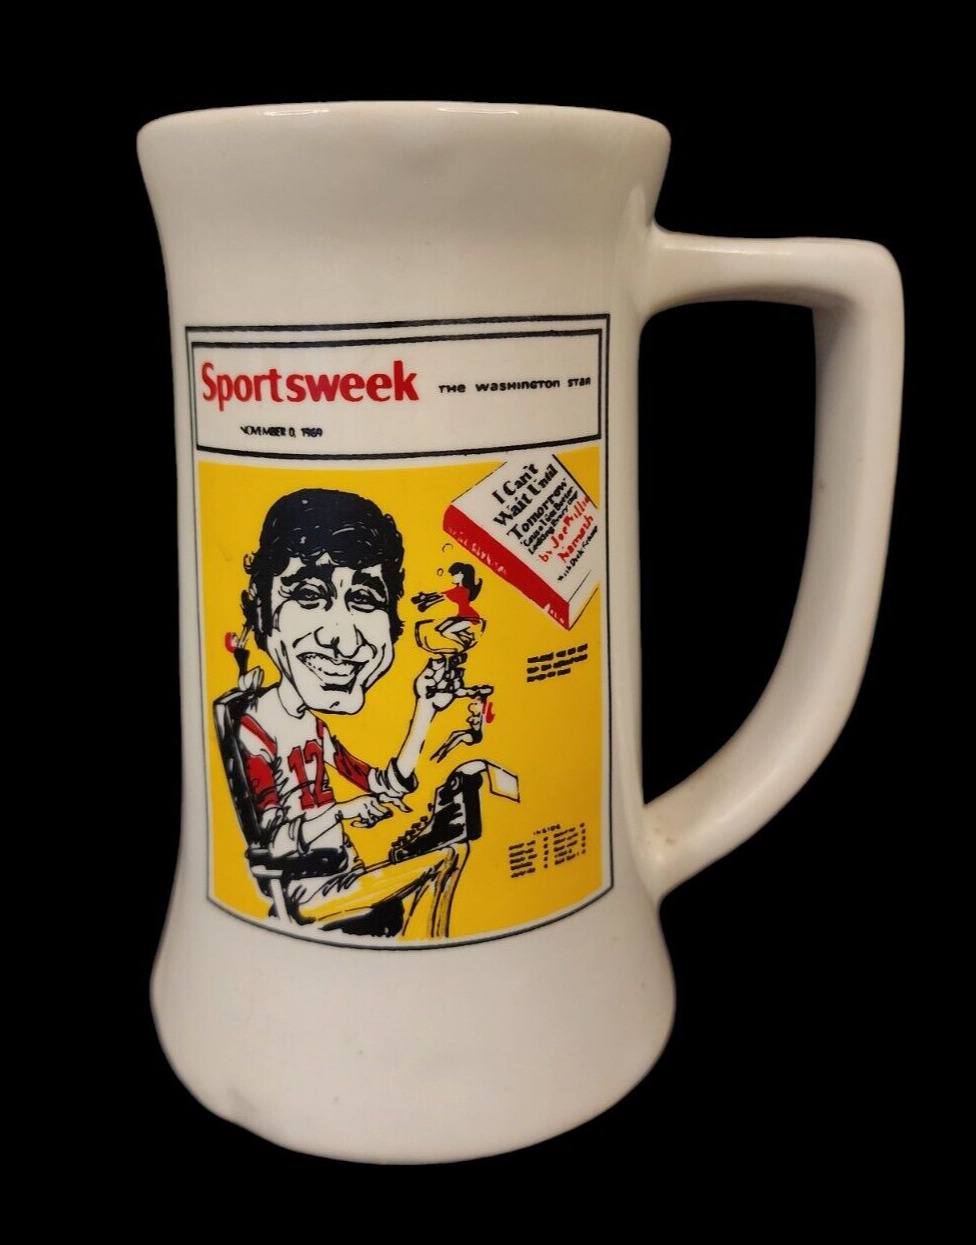 Vintage Sportsweek Washington Star Joe Namath 1969 Coffee Beer Mug